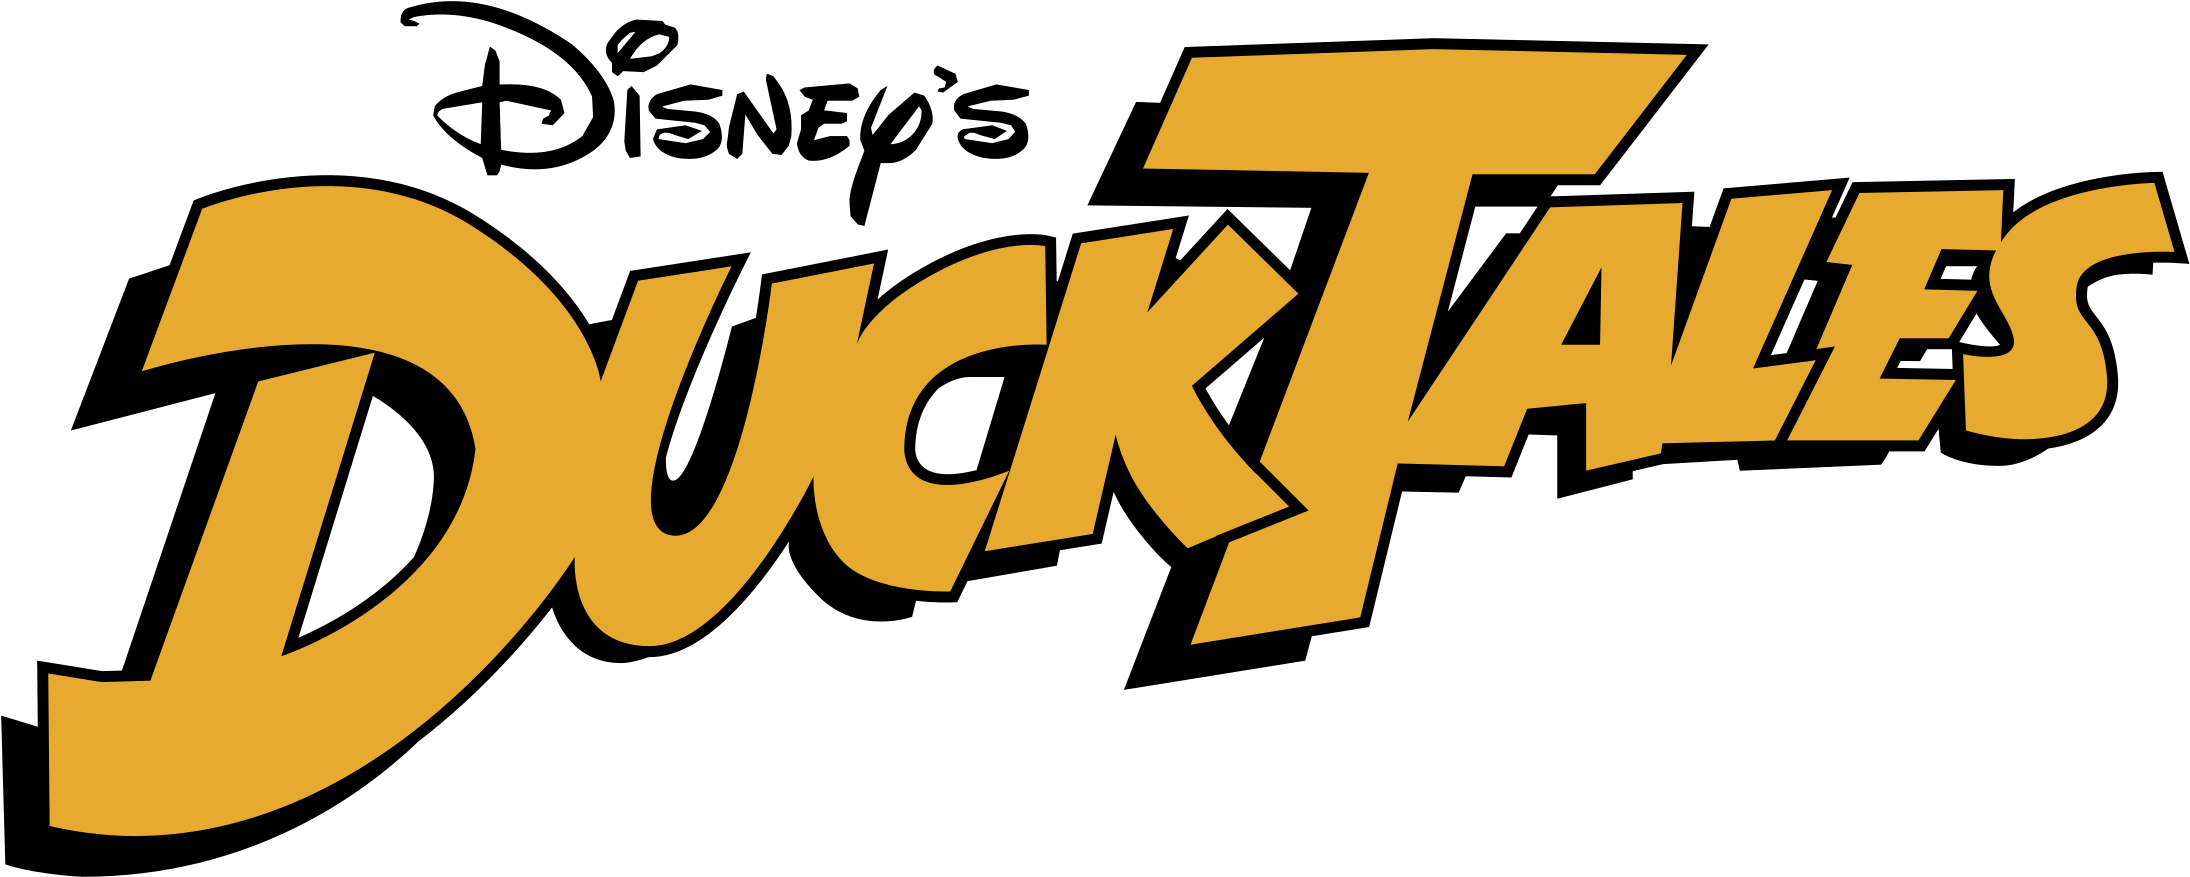 DuckTales PNG Free Download